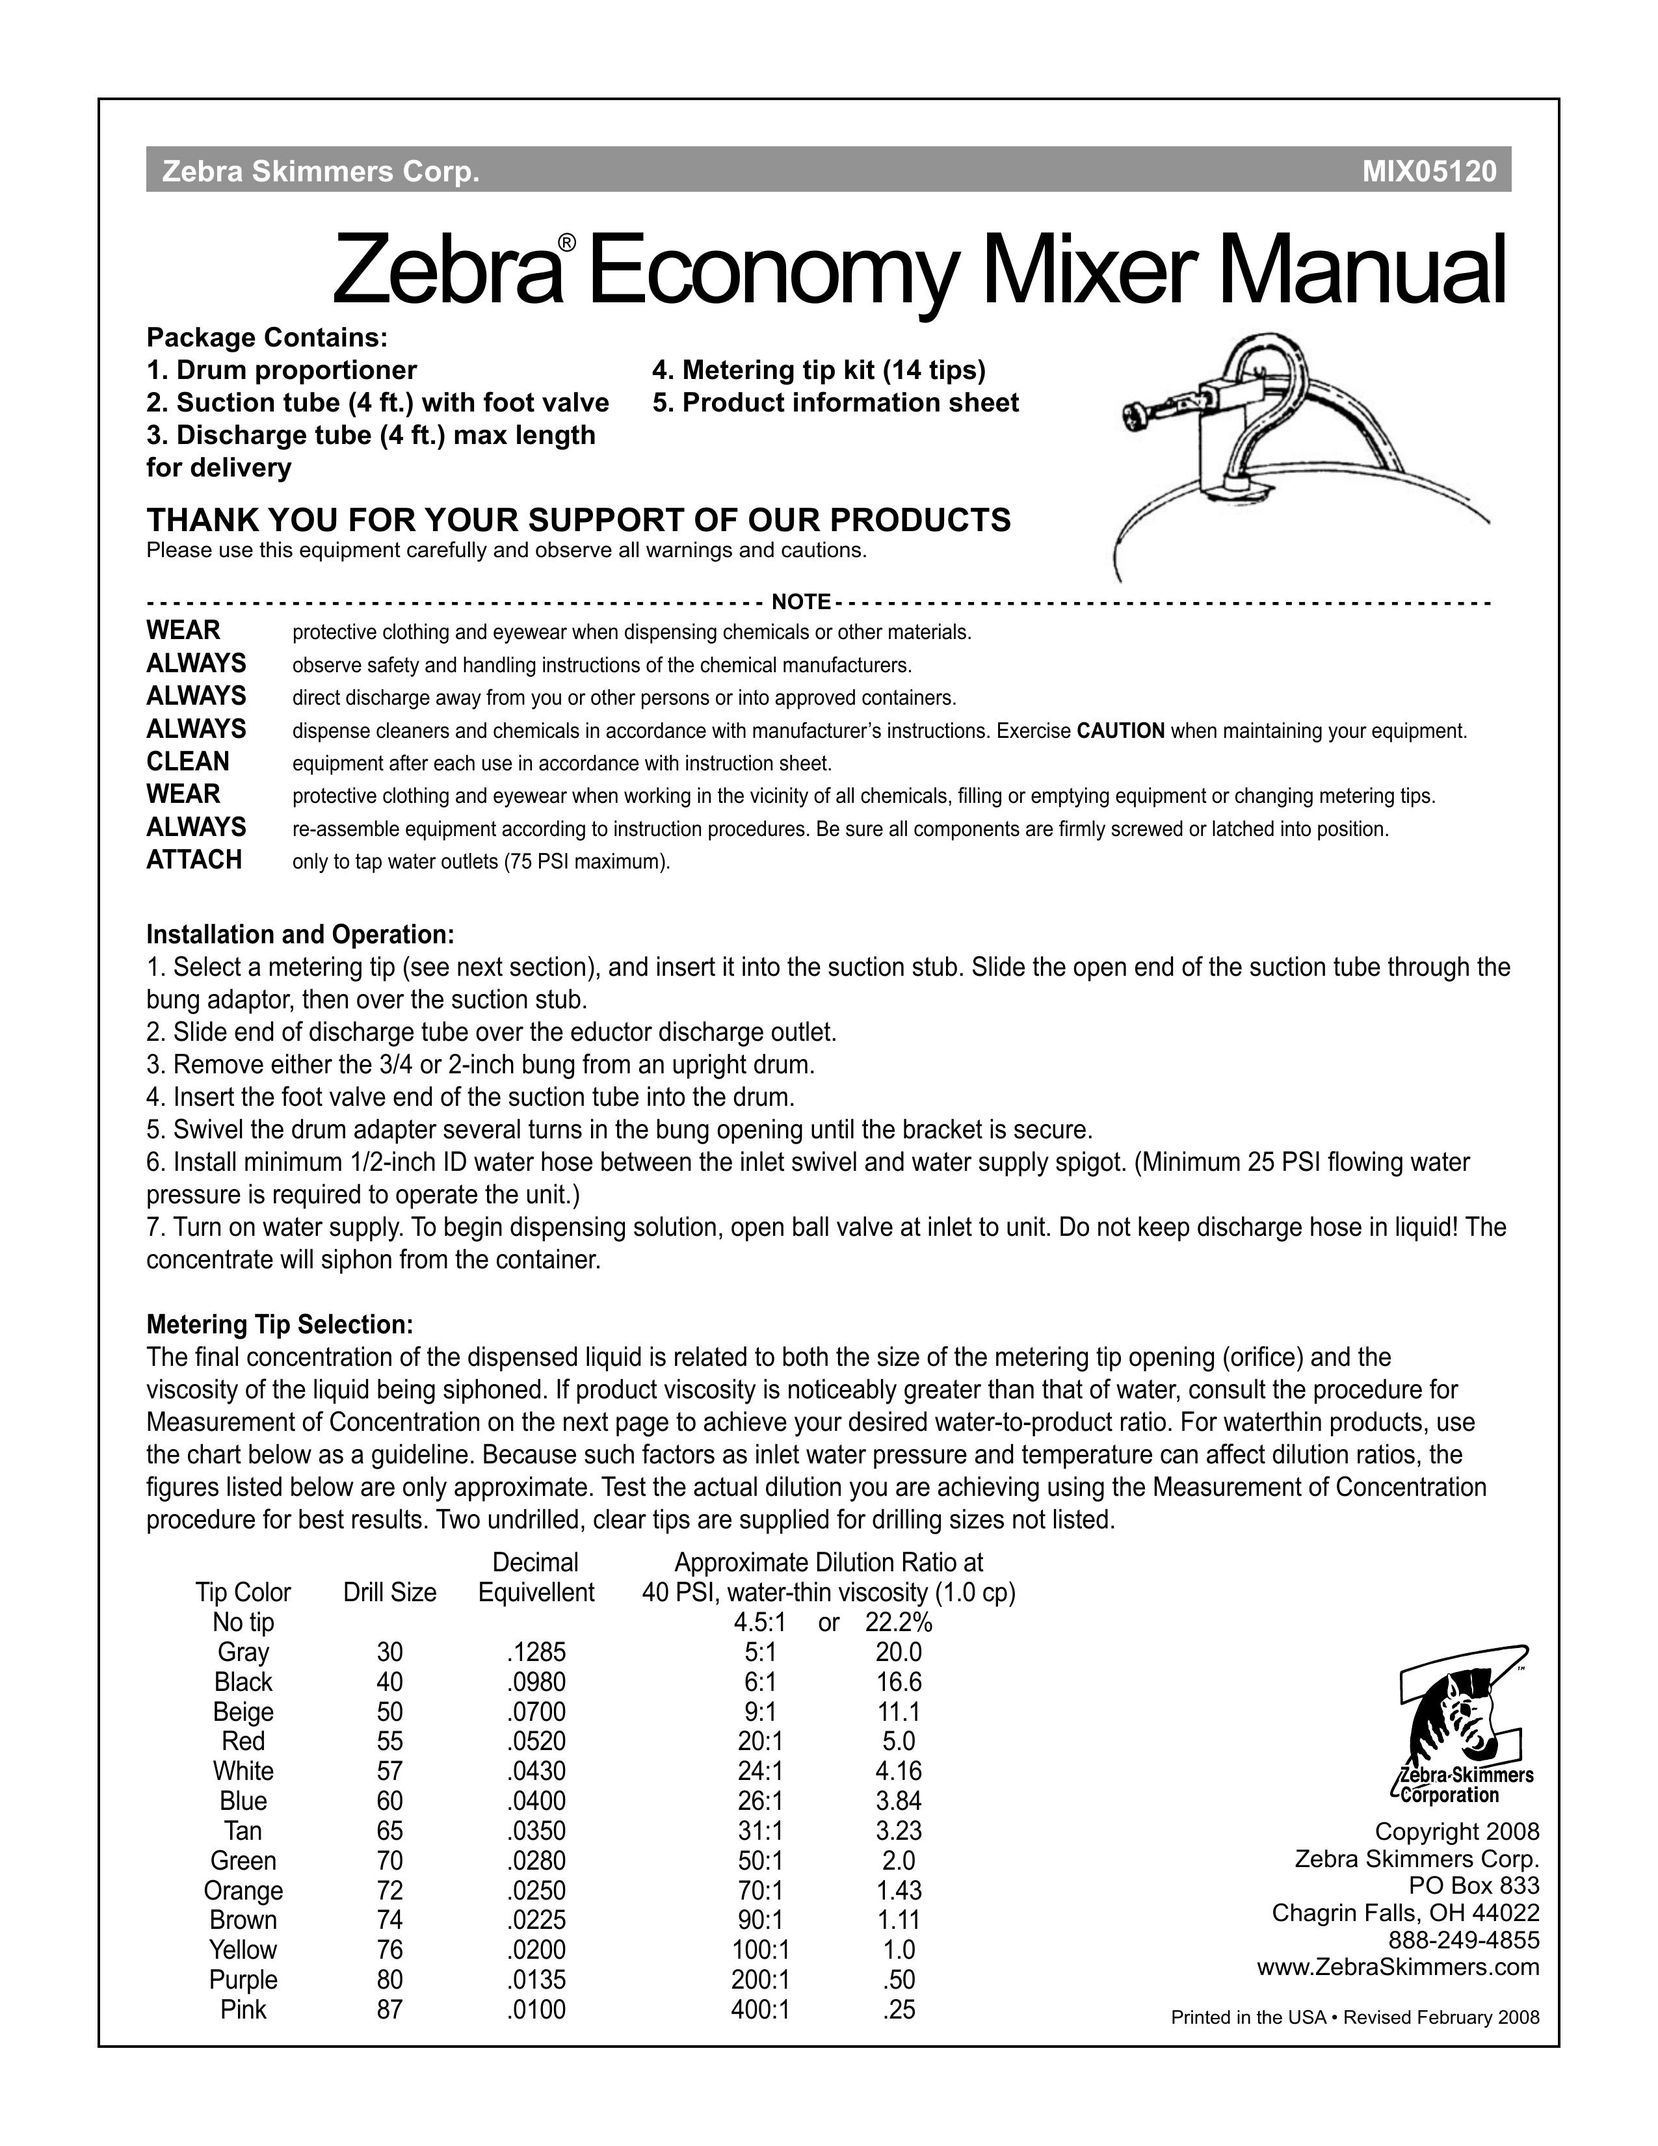 Zebra Technologies MIX05120 Mixer User Manual